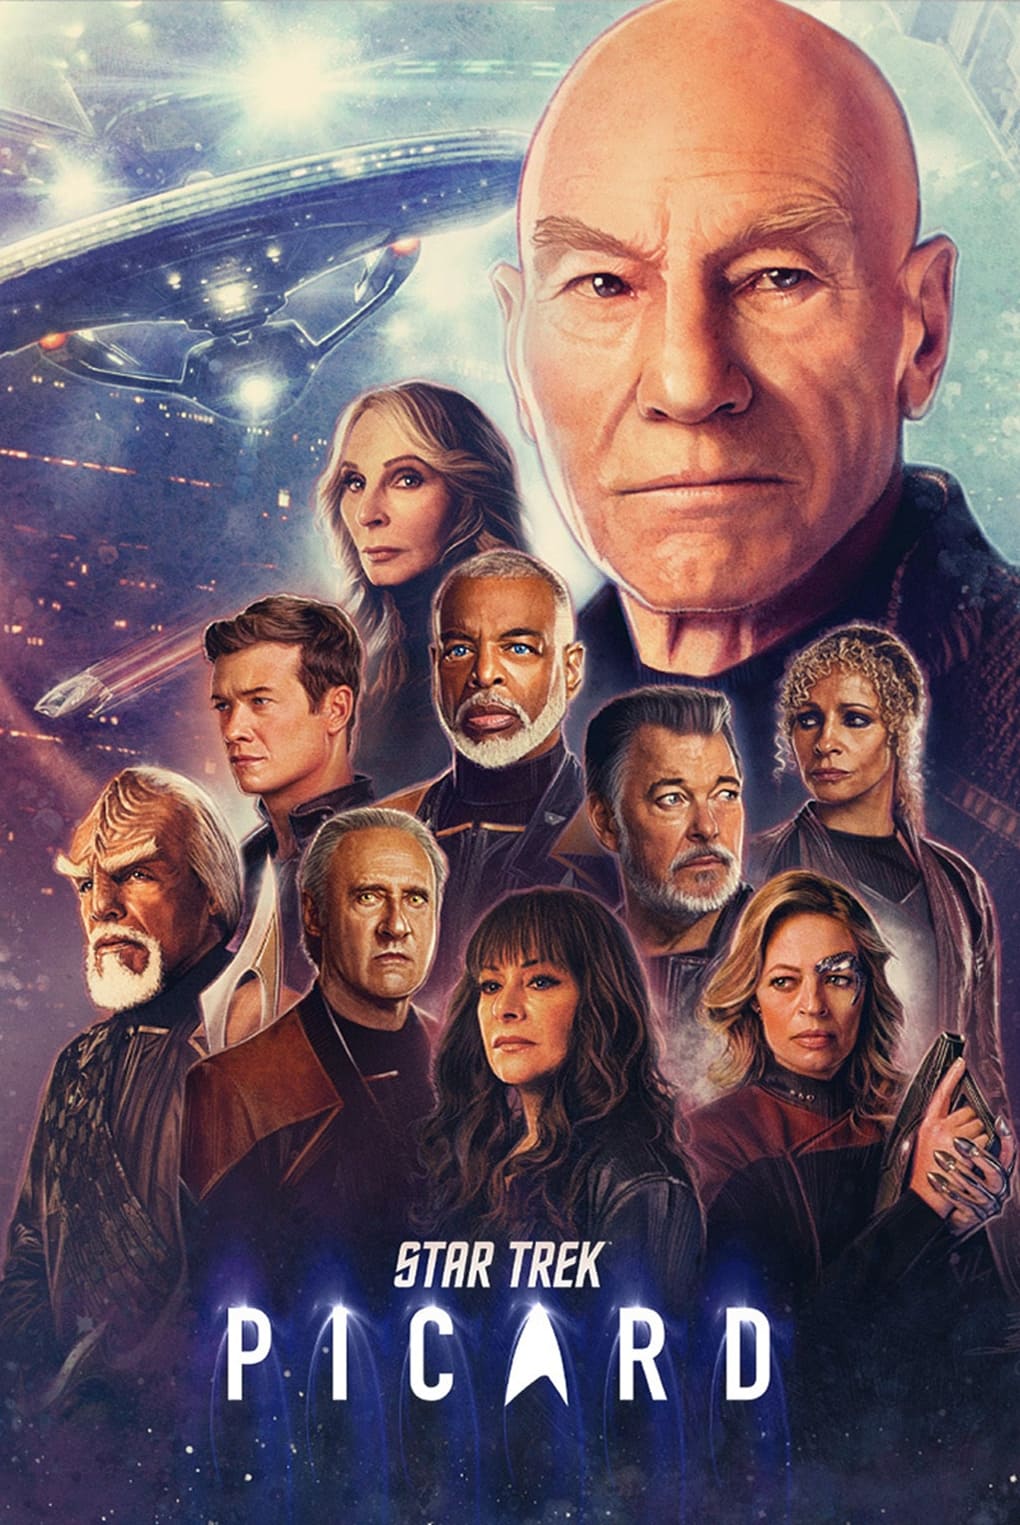 Star Trek: Picard TV Shows About Spaceship